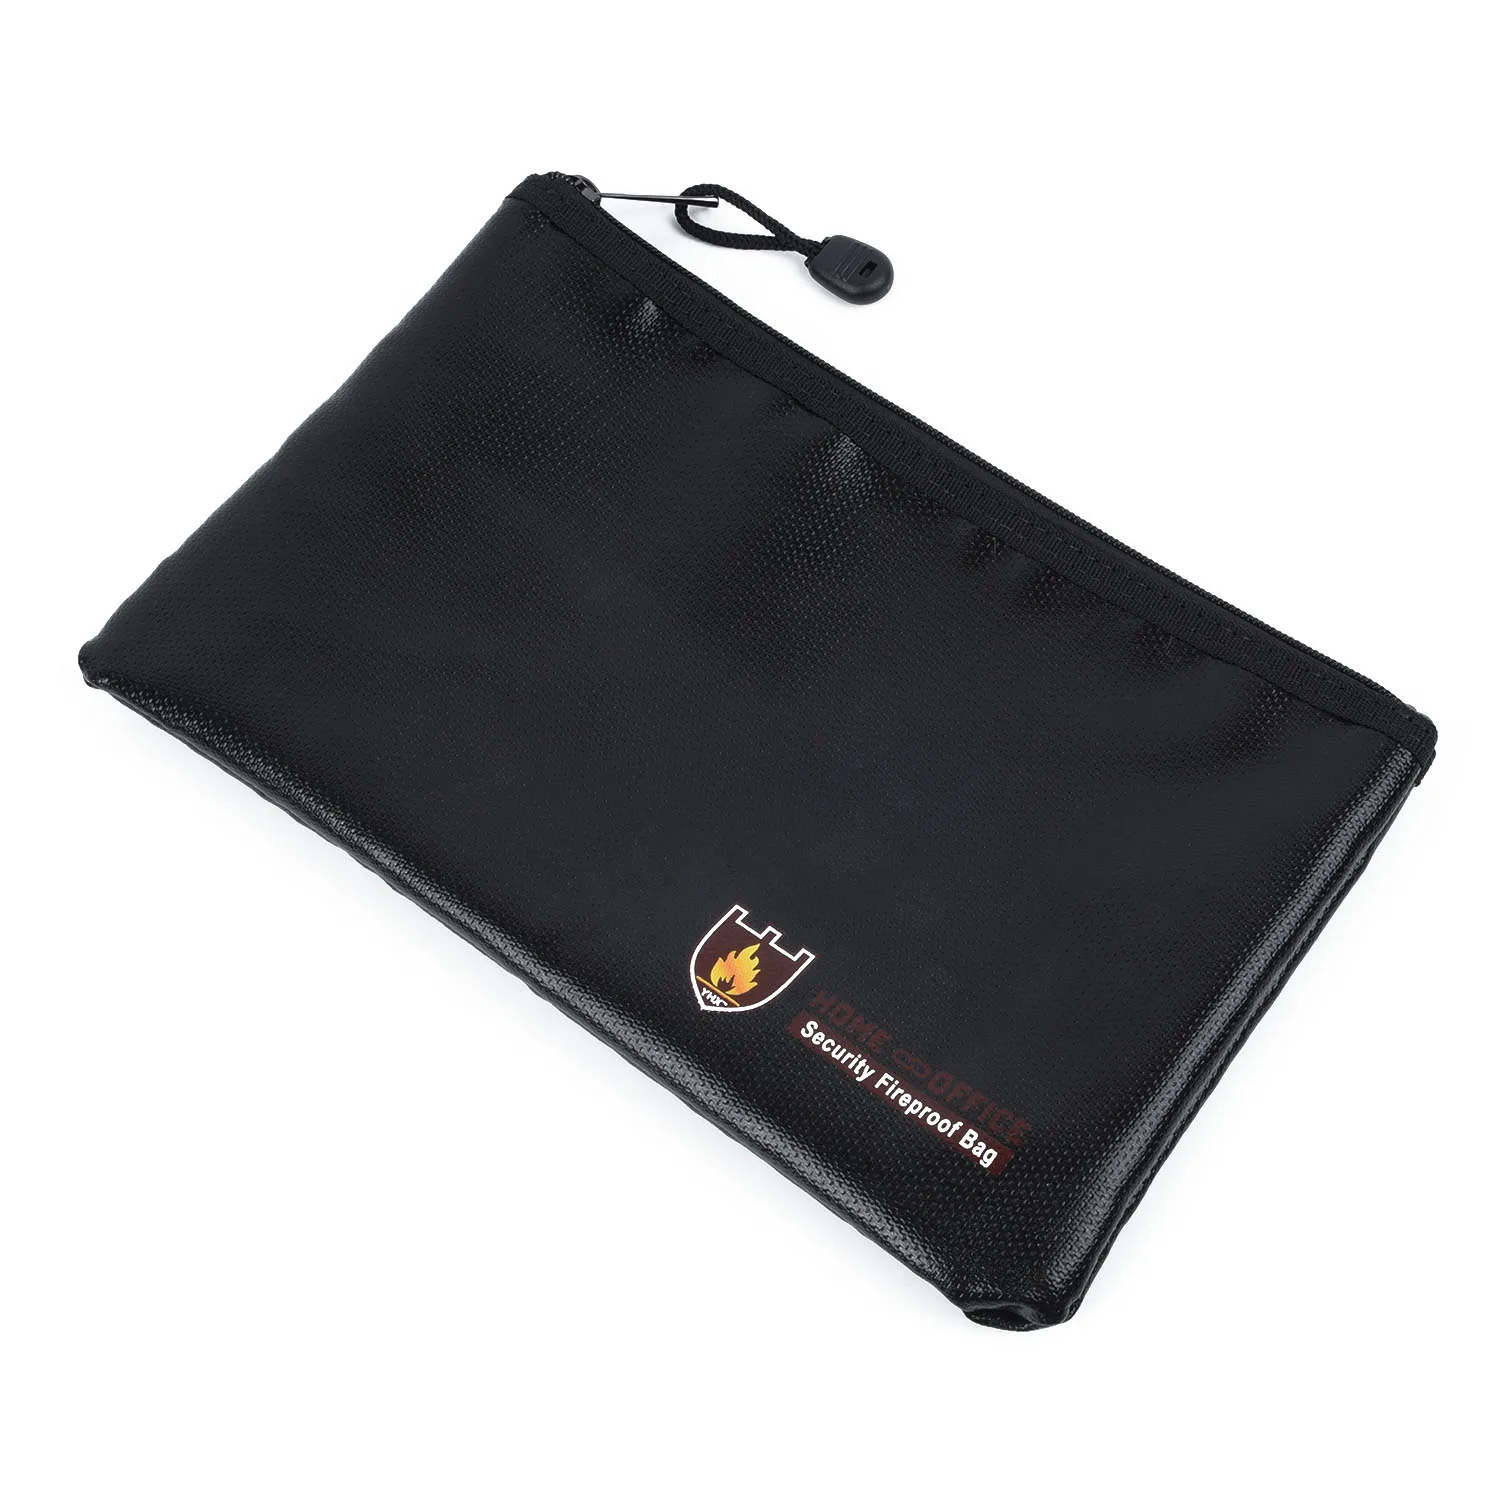 1 Pcs Document Bags with Zipper Fireproof Waterproof For iPad, Money, Jewelry, Passport, Document Storage Case